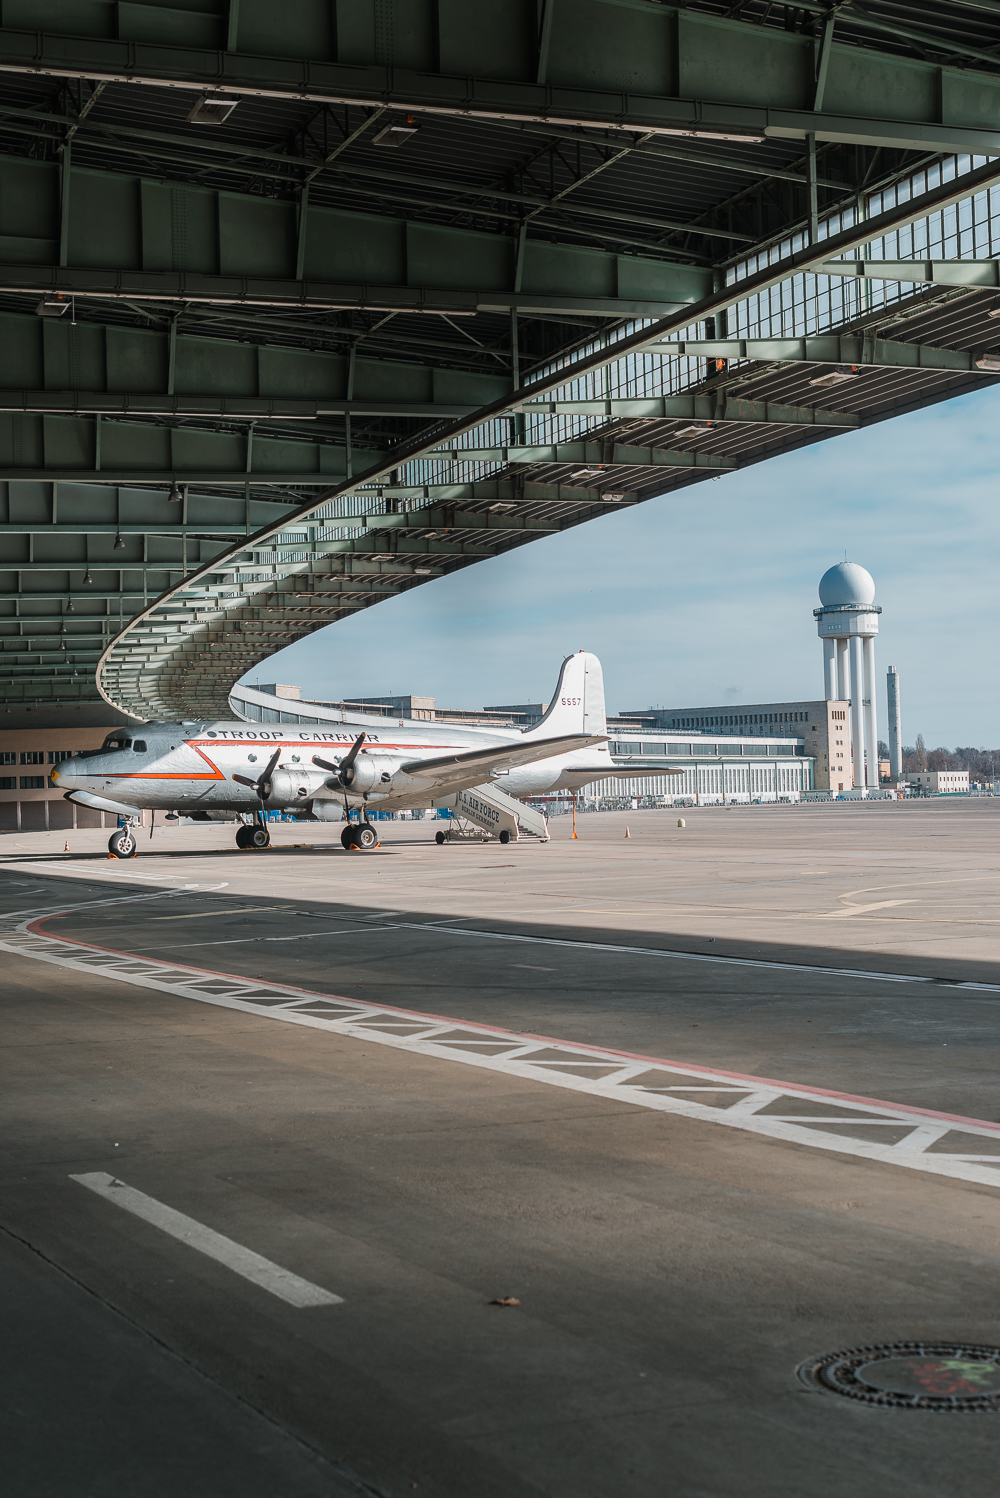 Besondere Orte in Berlin entdecken-Flughafen Tempelhof-Führung Tempelhof-andysparkles